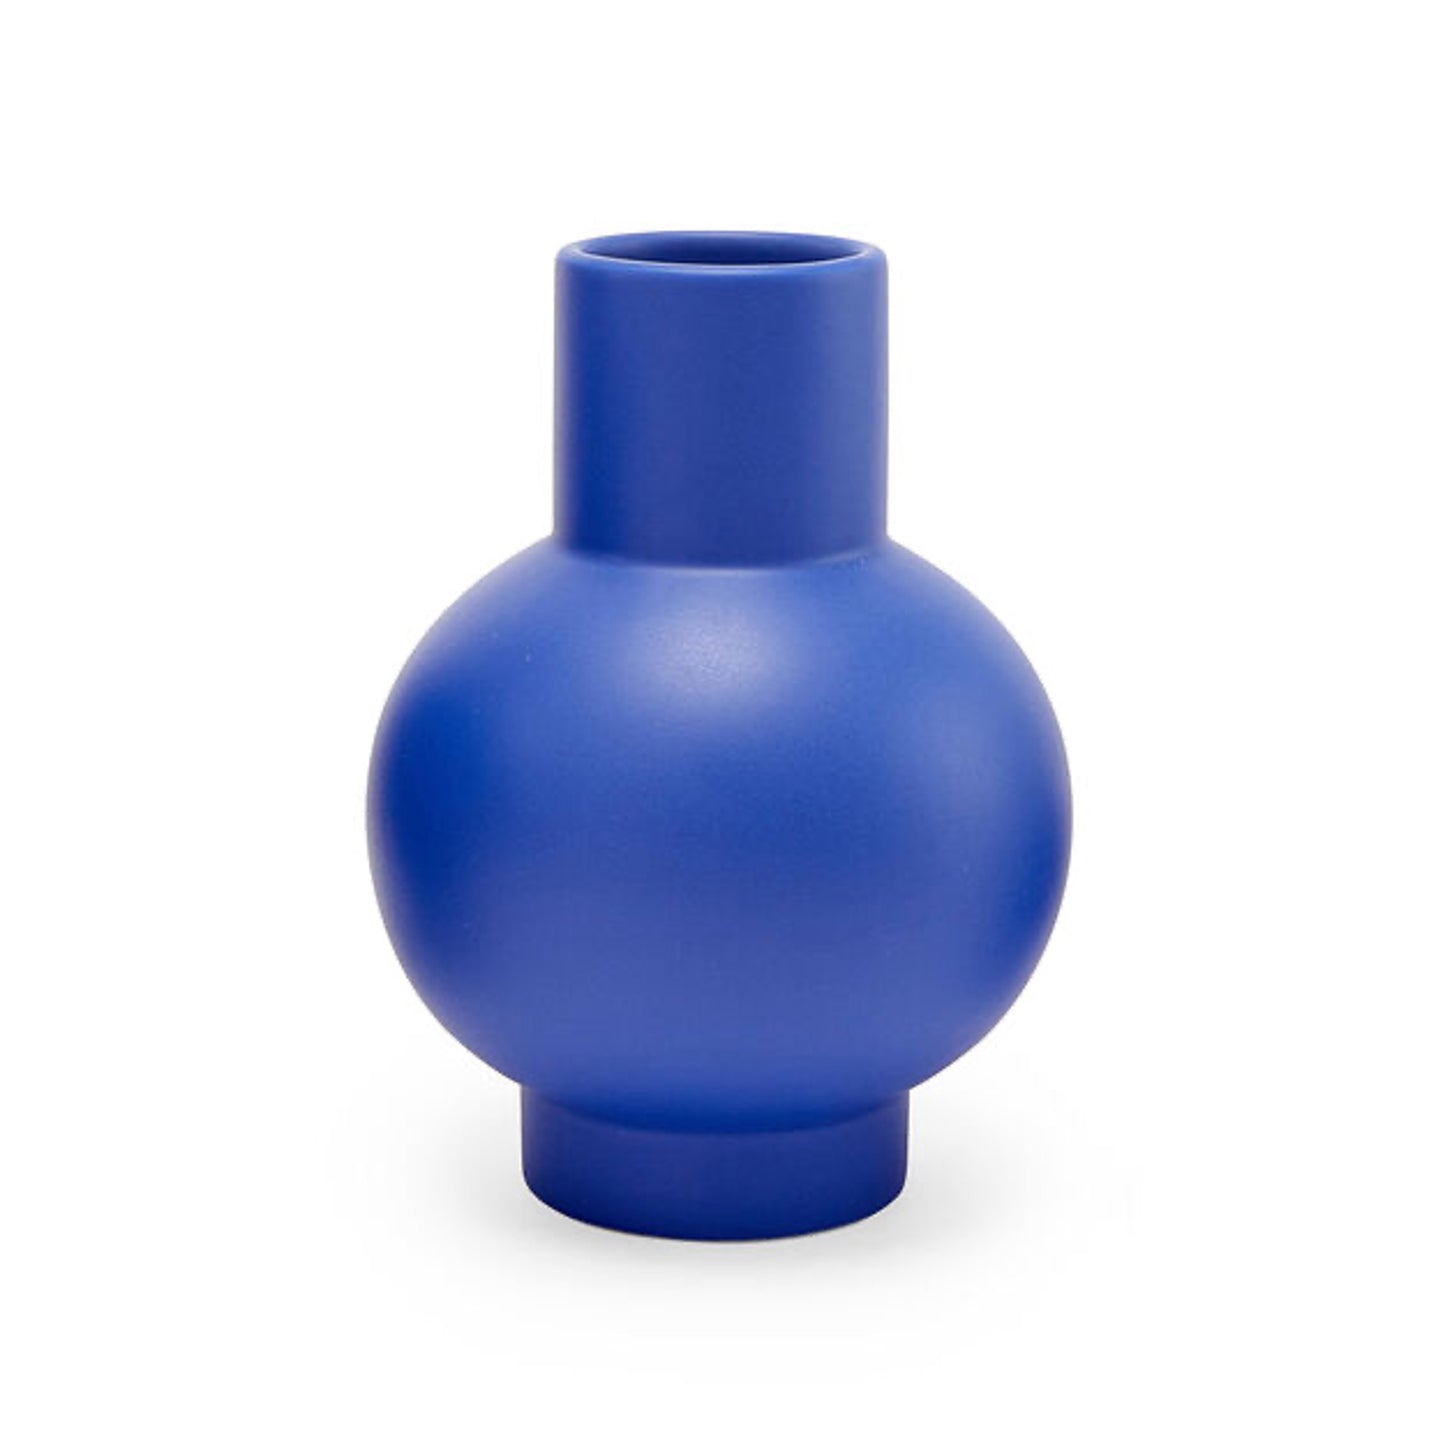 Horizon blue modern vase